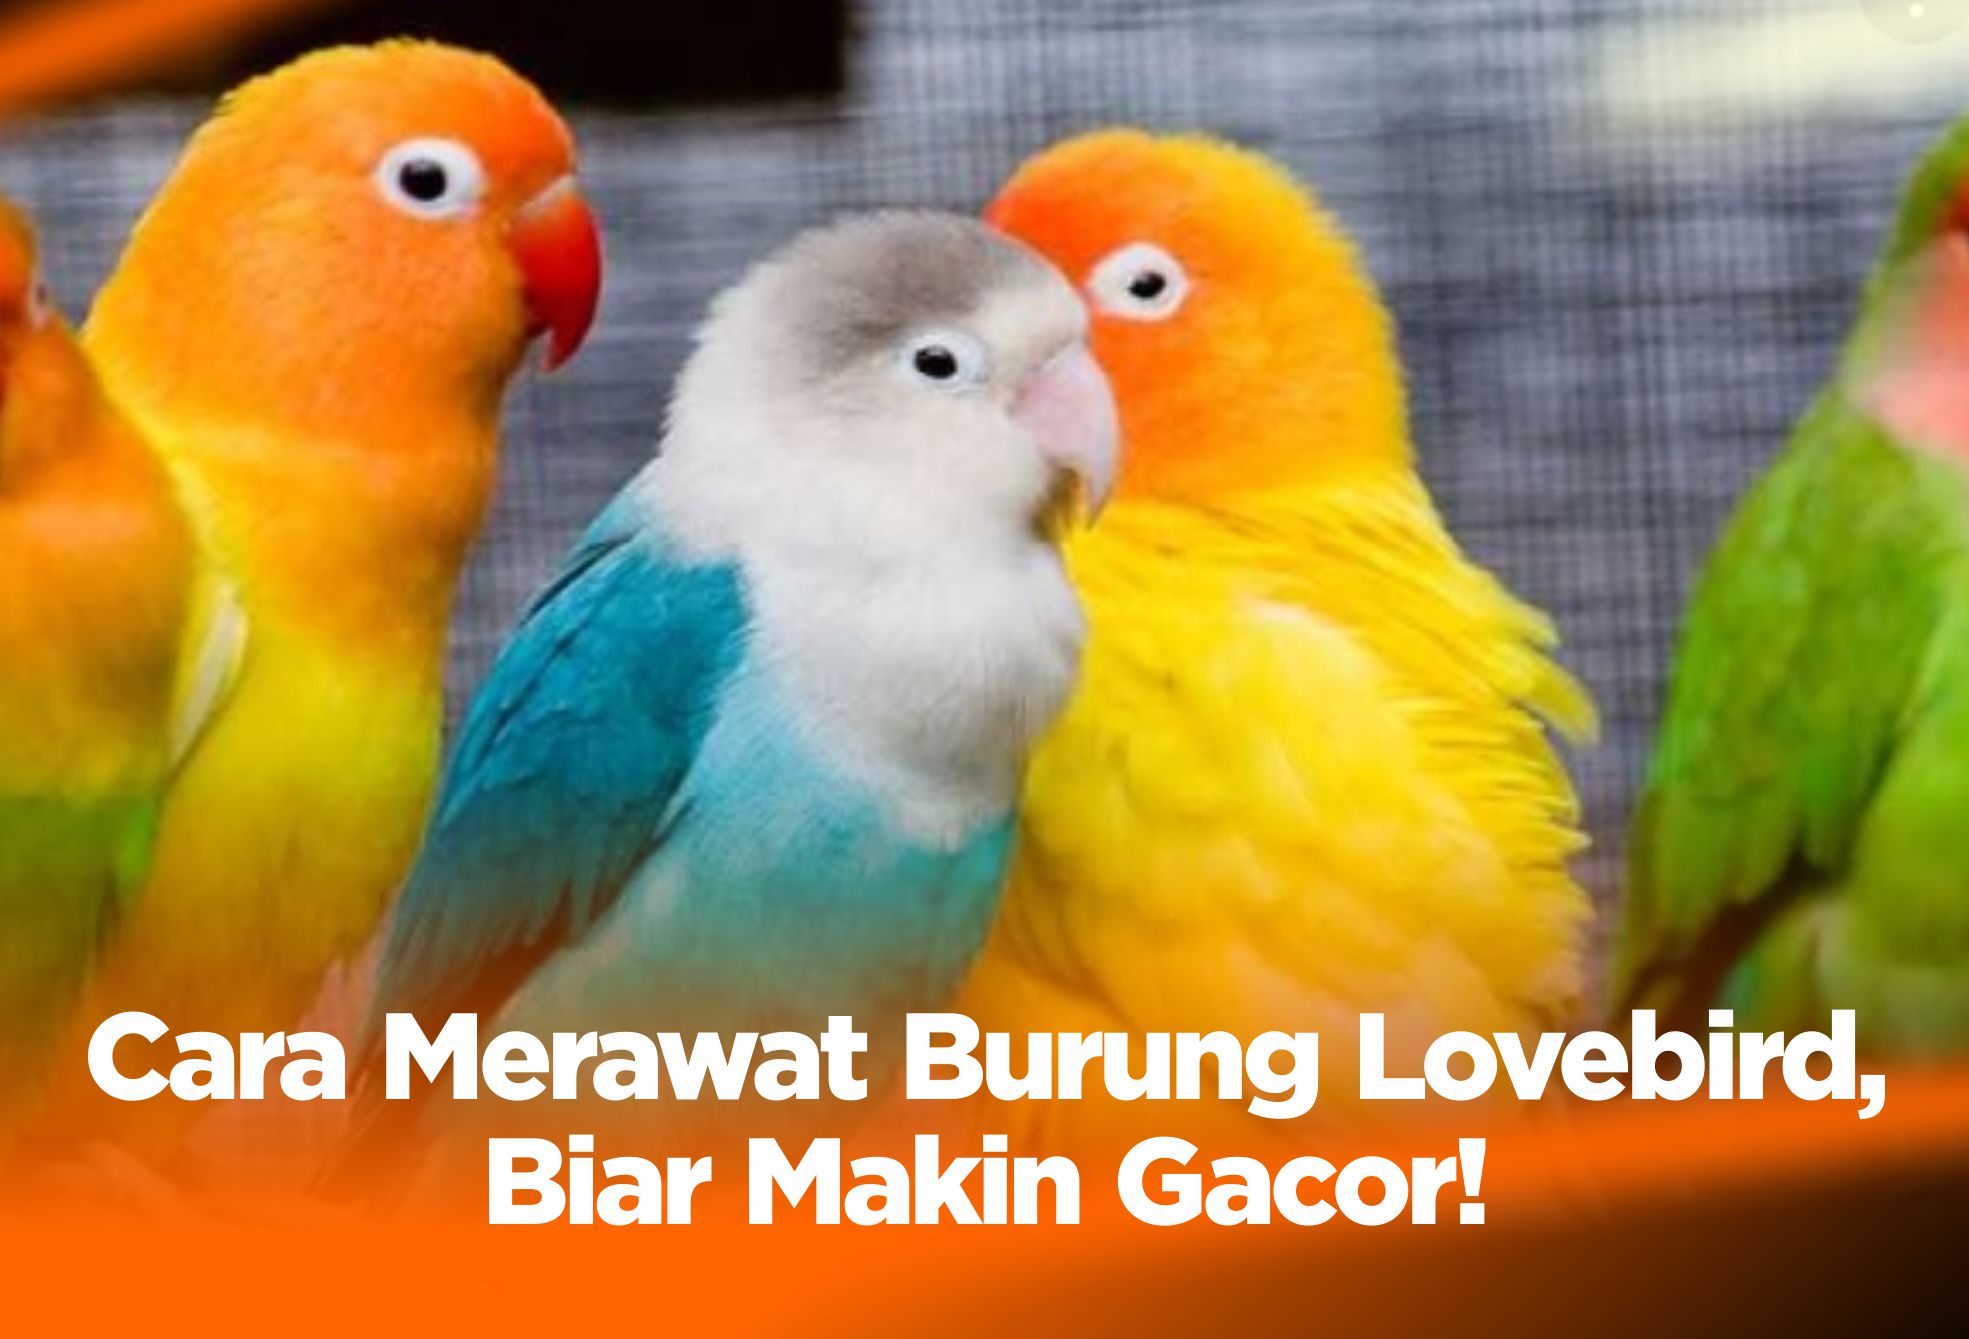 Cara Merawat Burung Lovebird, Biar Makin Gacor!